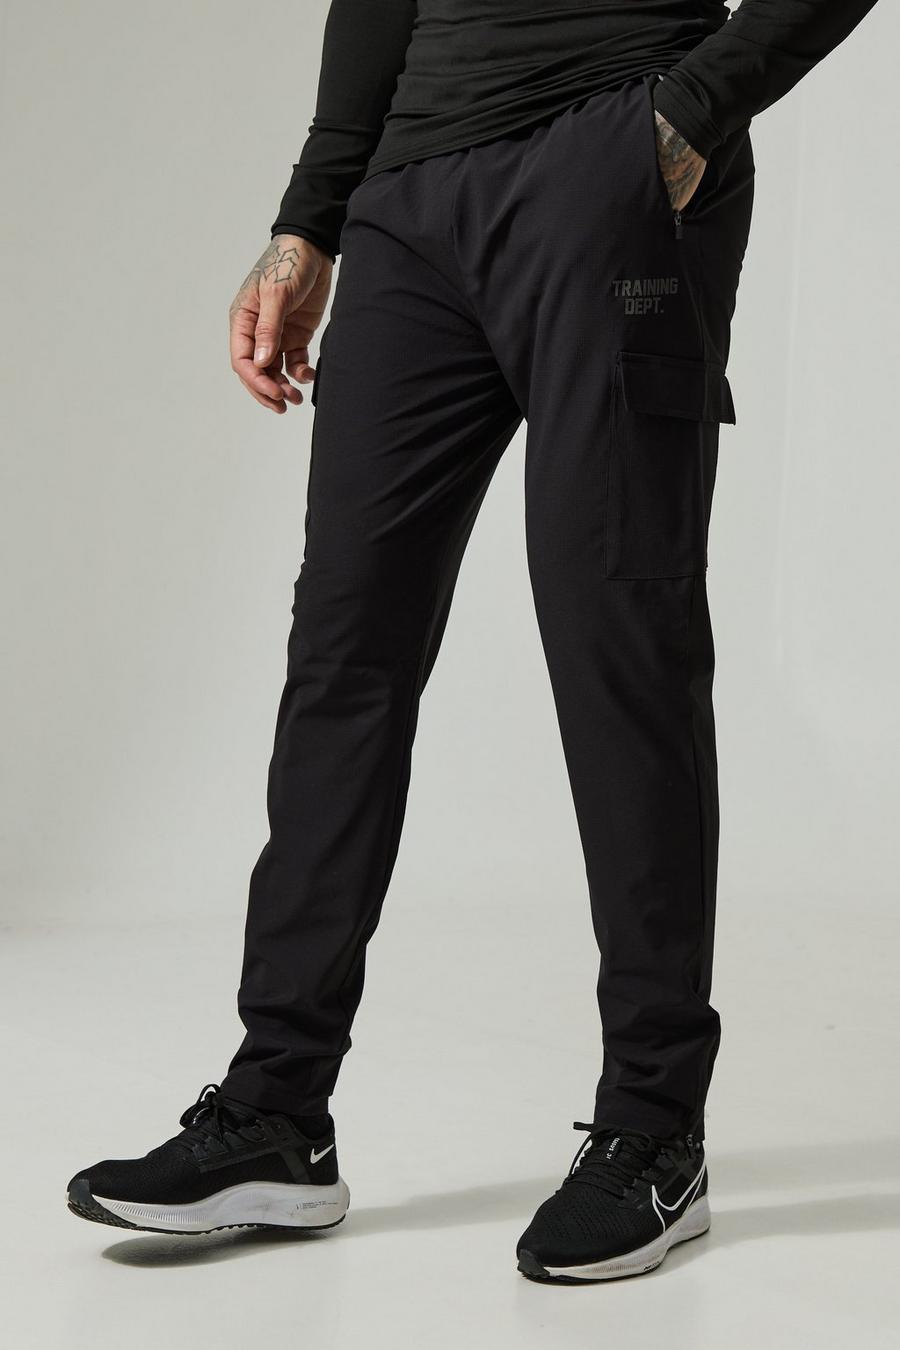 Pantalón deportivo Tall Active cargo ajustado, Black nero